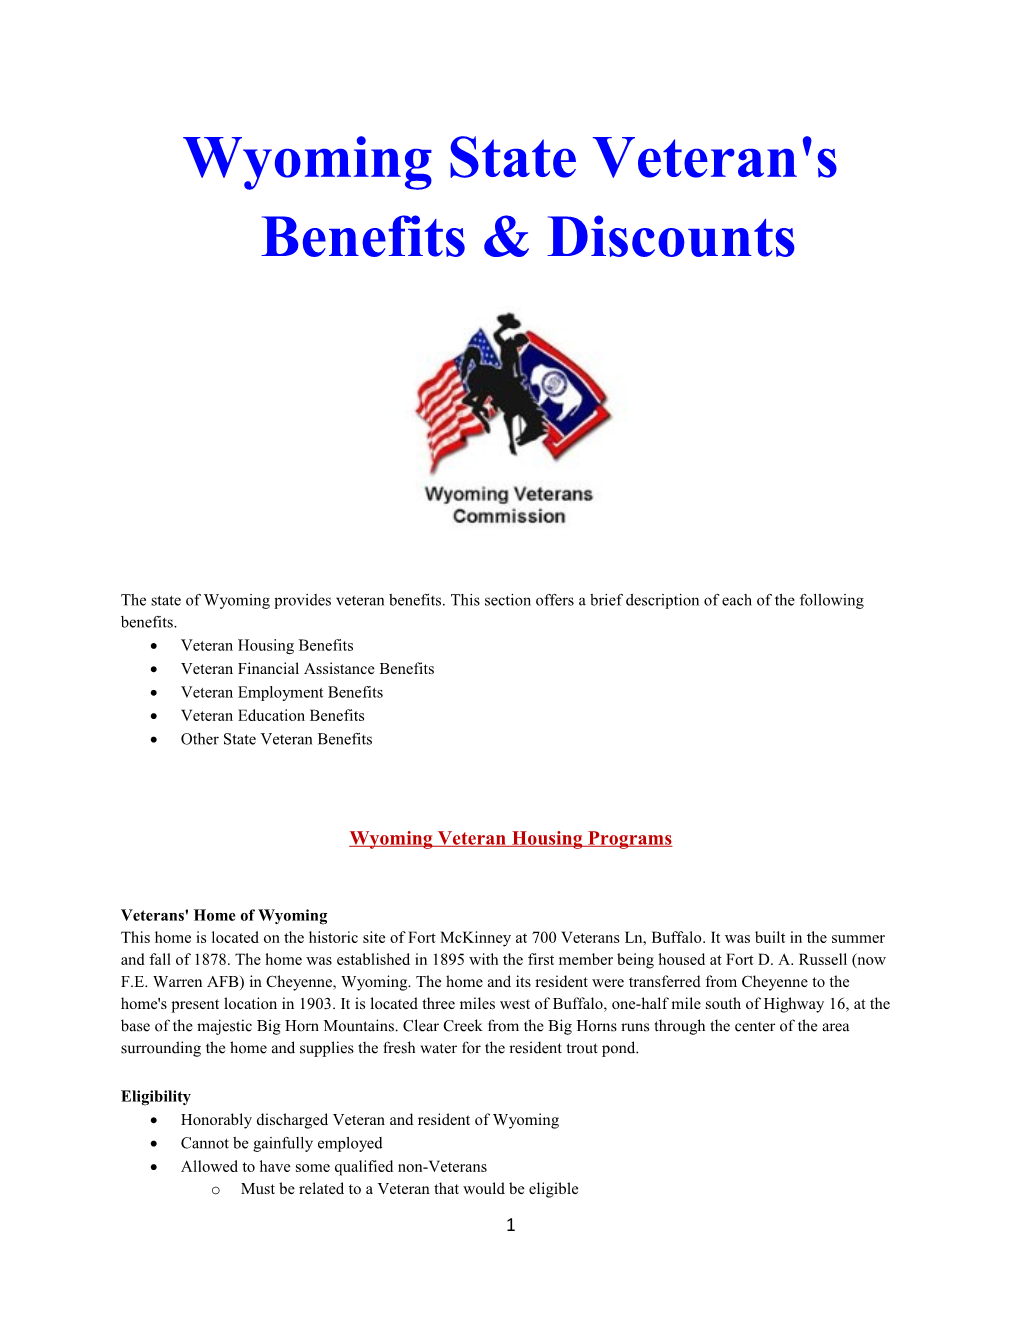 Wyoming State Veteran's Benefits & Discounts